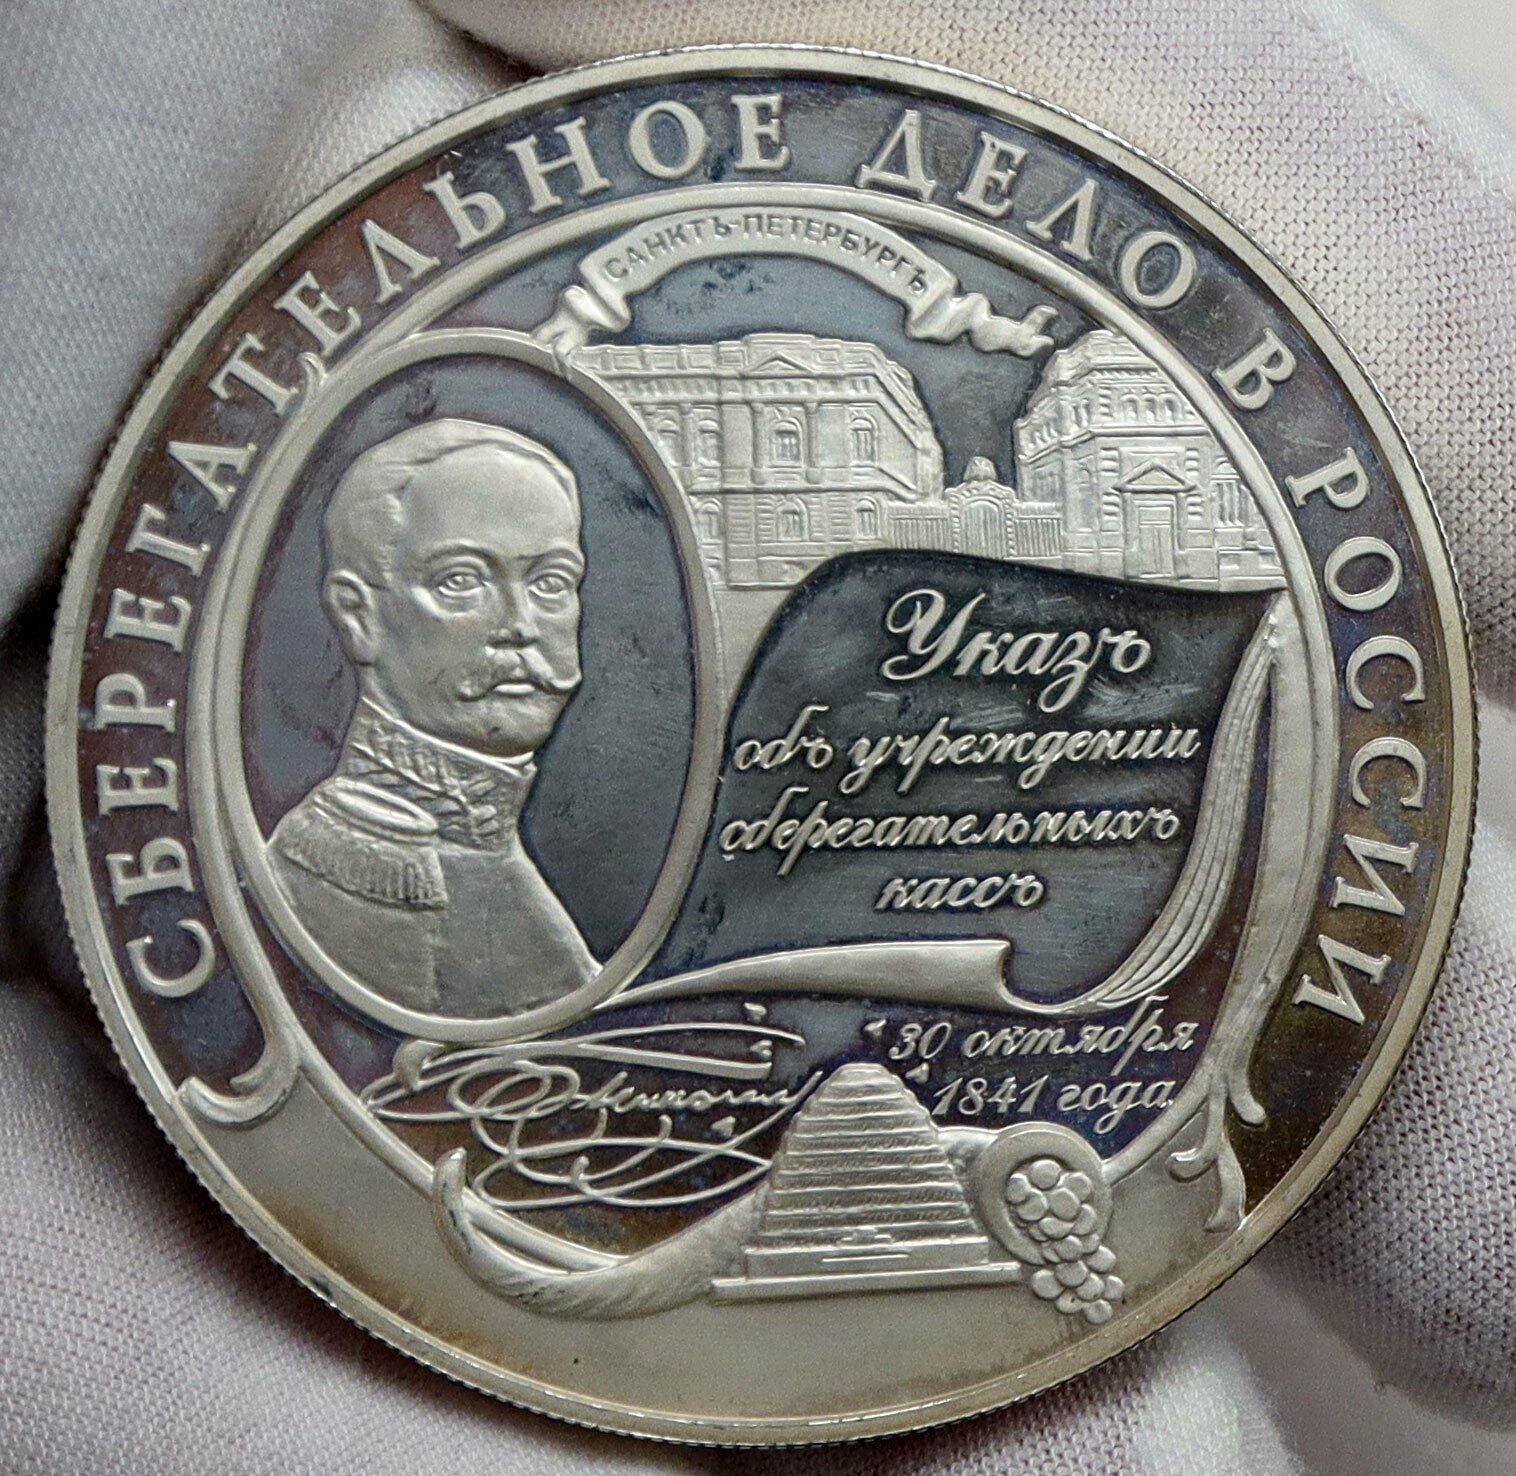 2001 RUSSIA Czar Nicholas I SAVINGS BANK AFFAIR Proof Silver 25 Rubl Coin i86514